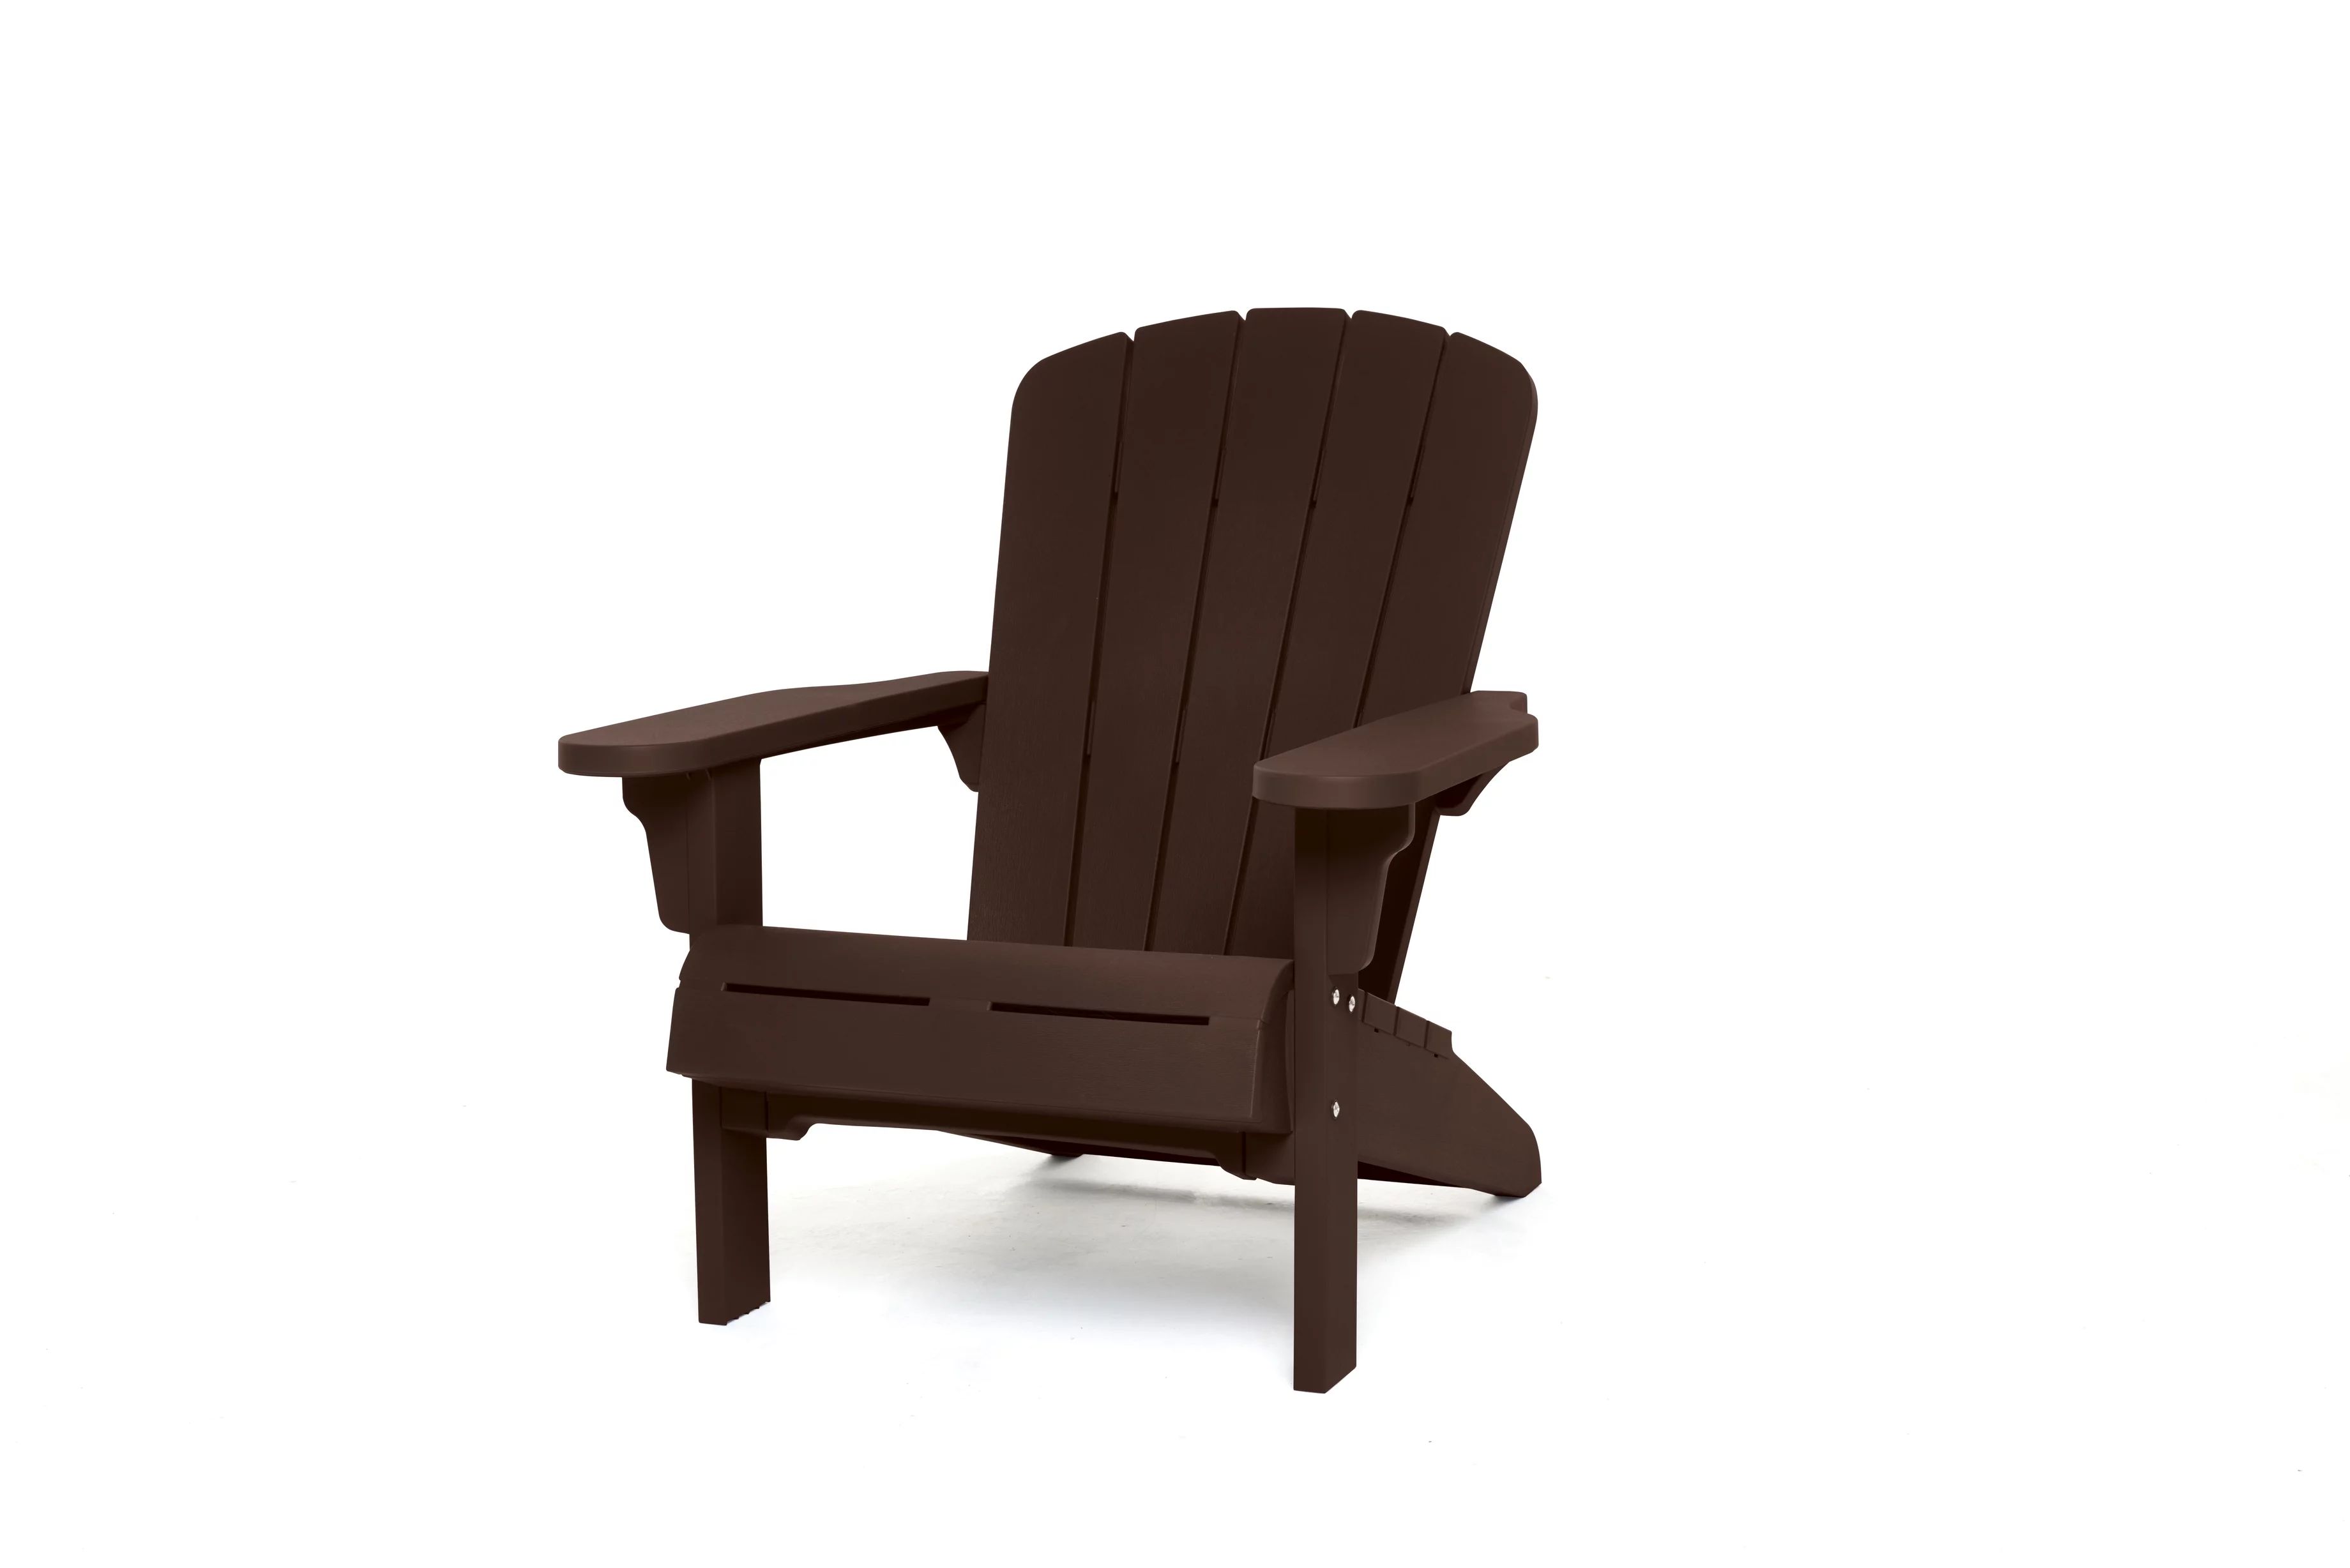 Keter Adirondack Chair, Resin Outdoor Furniture, Brown - Walmart.com | Walmart (US)